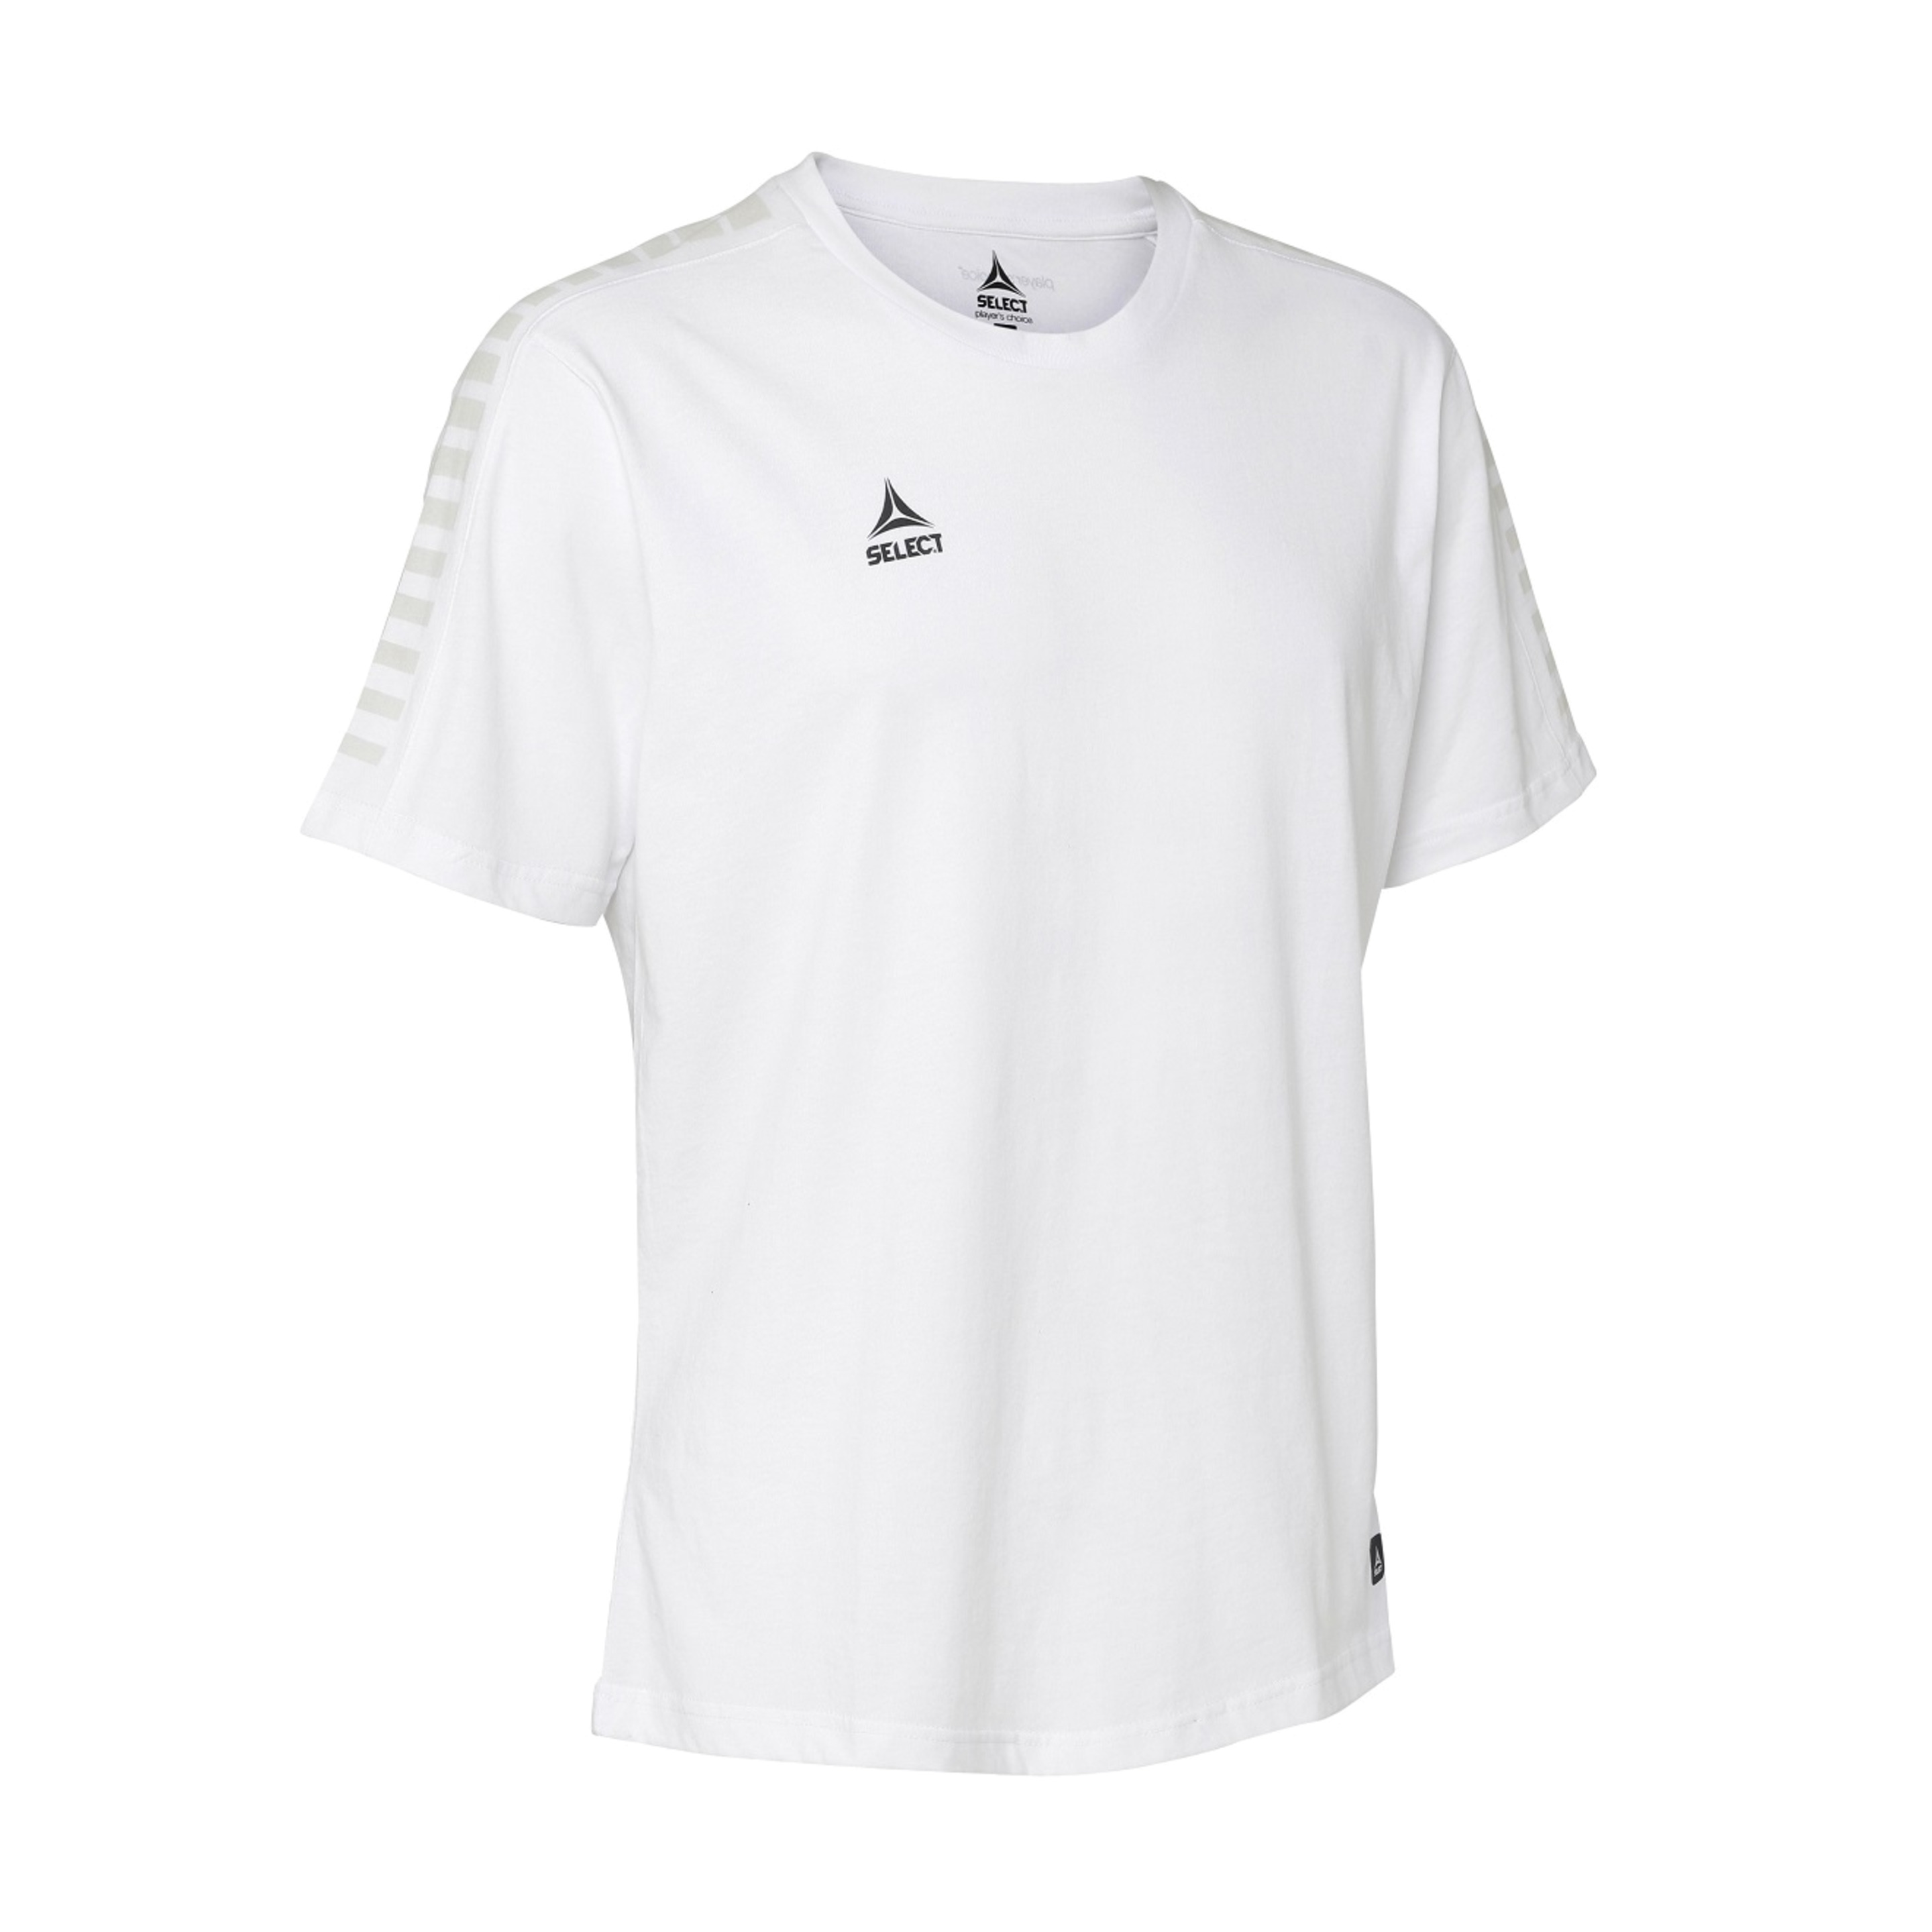 T-shirt Select Torino - blanco - 